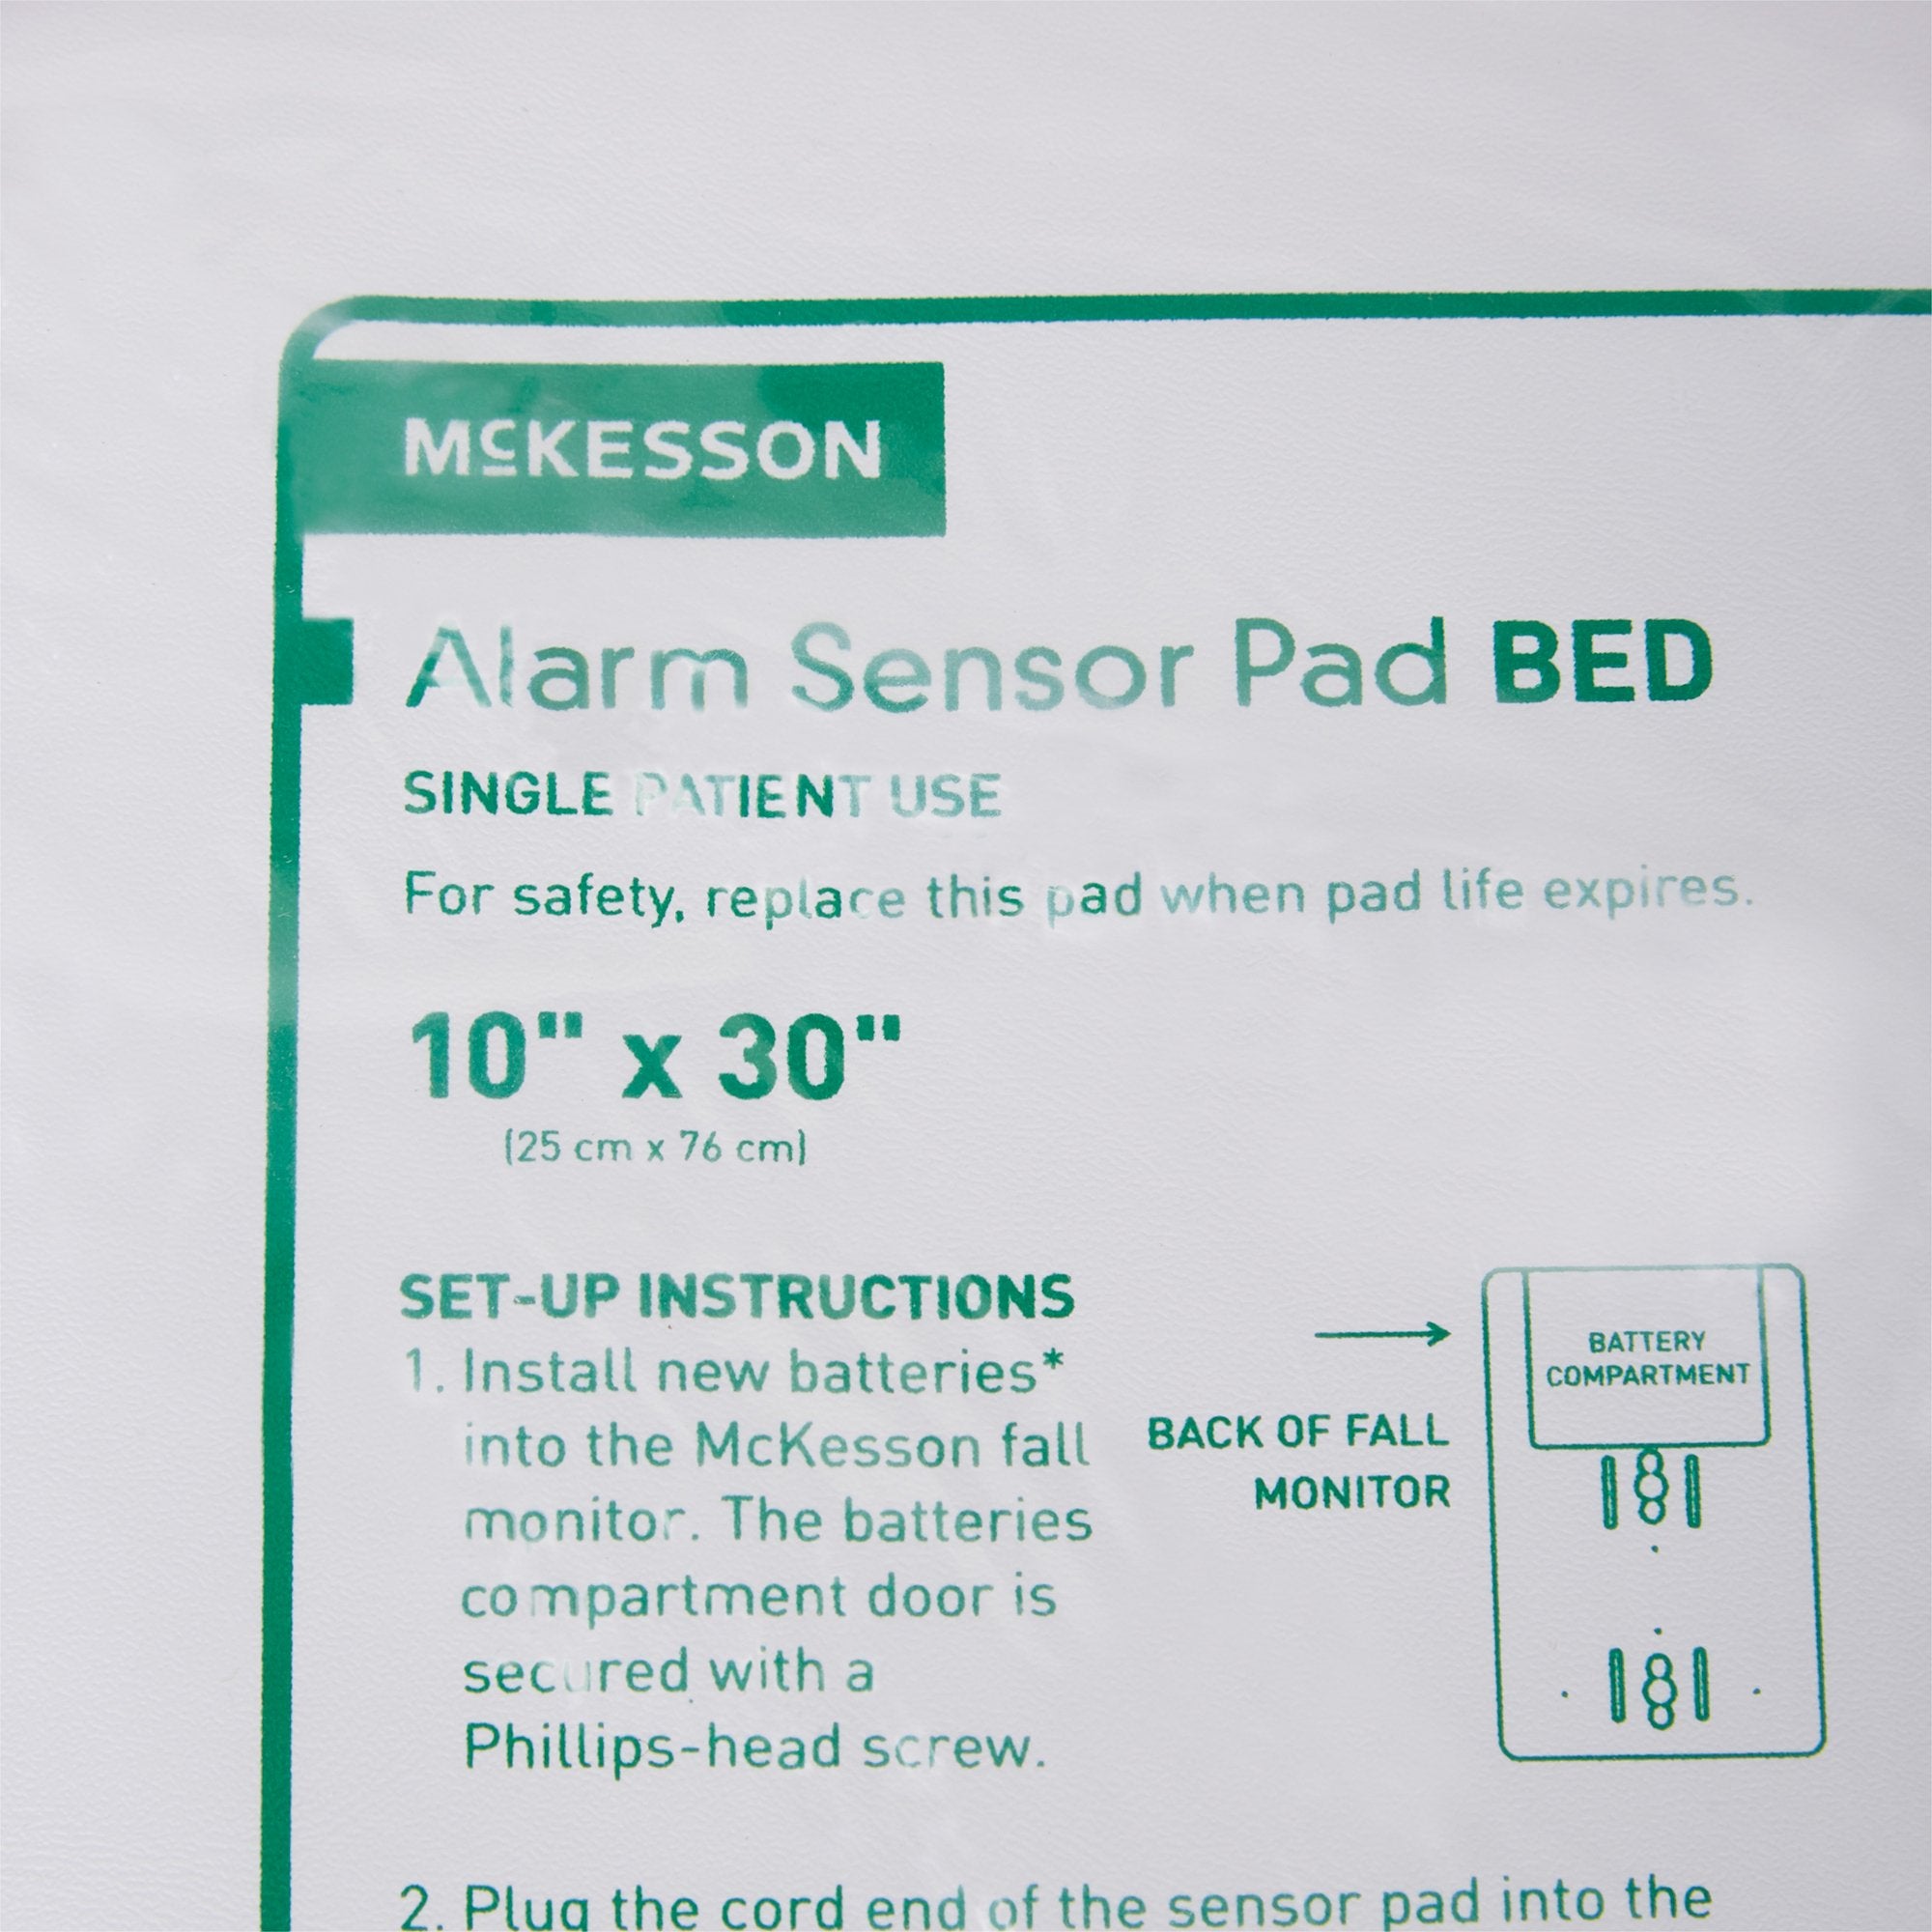 Alarm Sensor Pad McKesson Brand 10 X 30 Inch (25 cm x 76 cm)